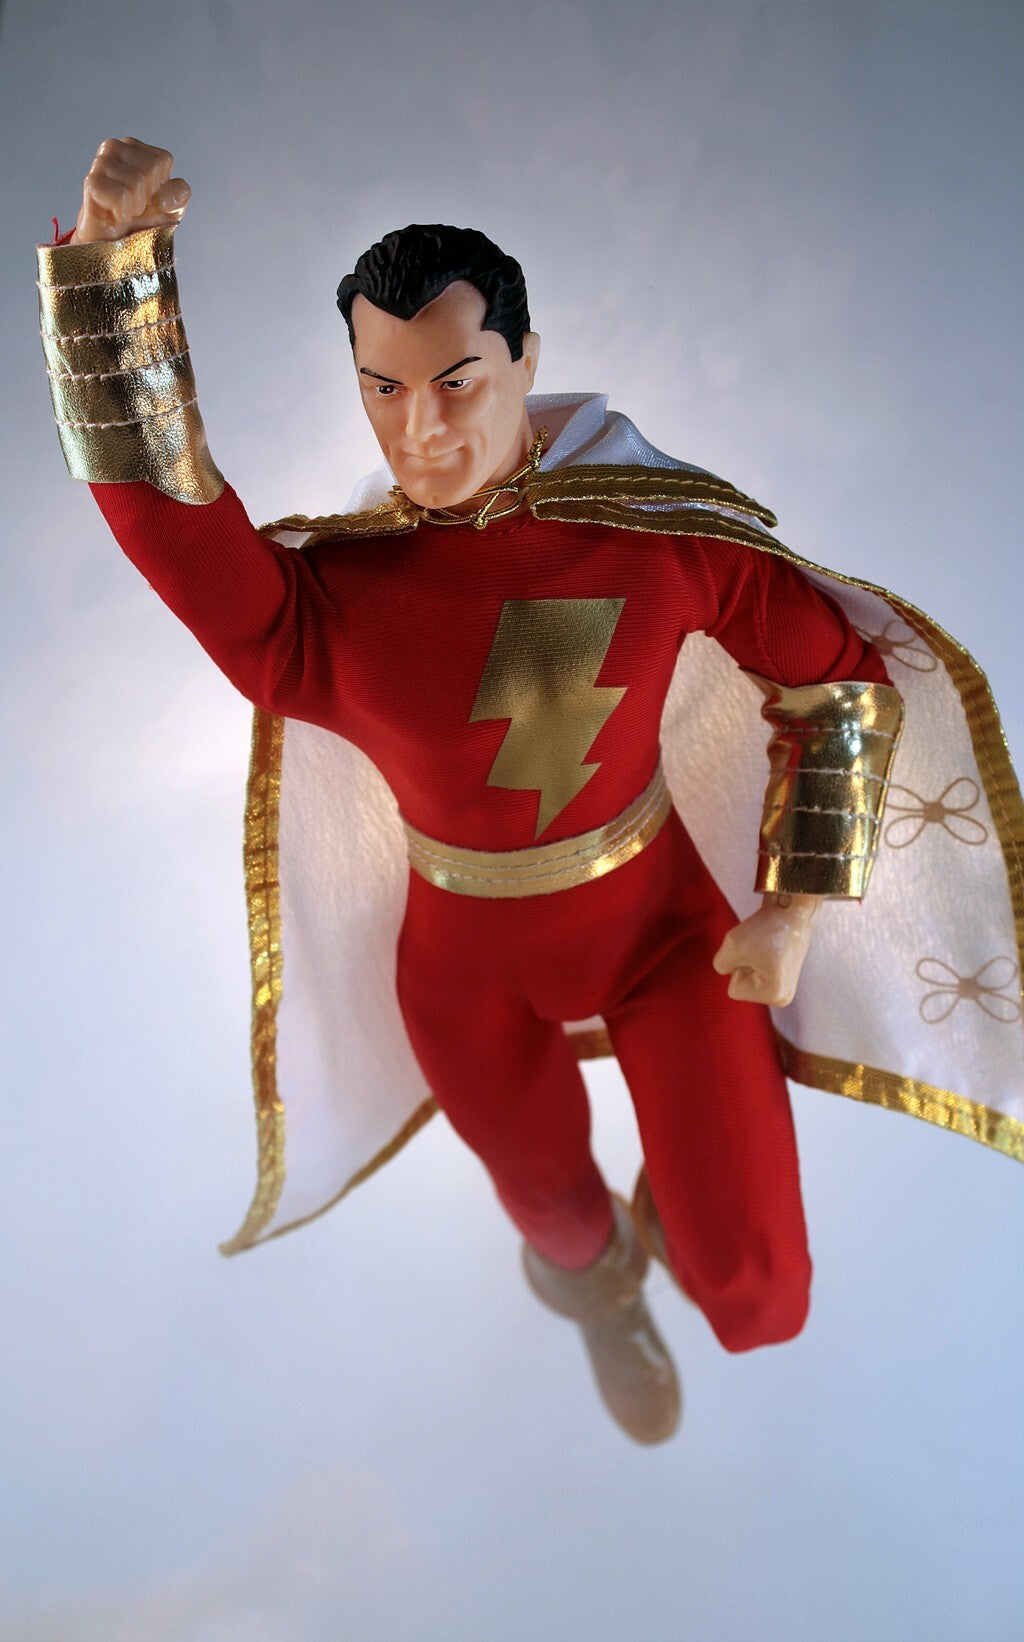  DC Comics: Shazam 14 inch Action Figure  0852404008478